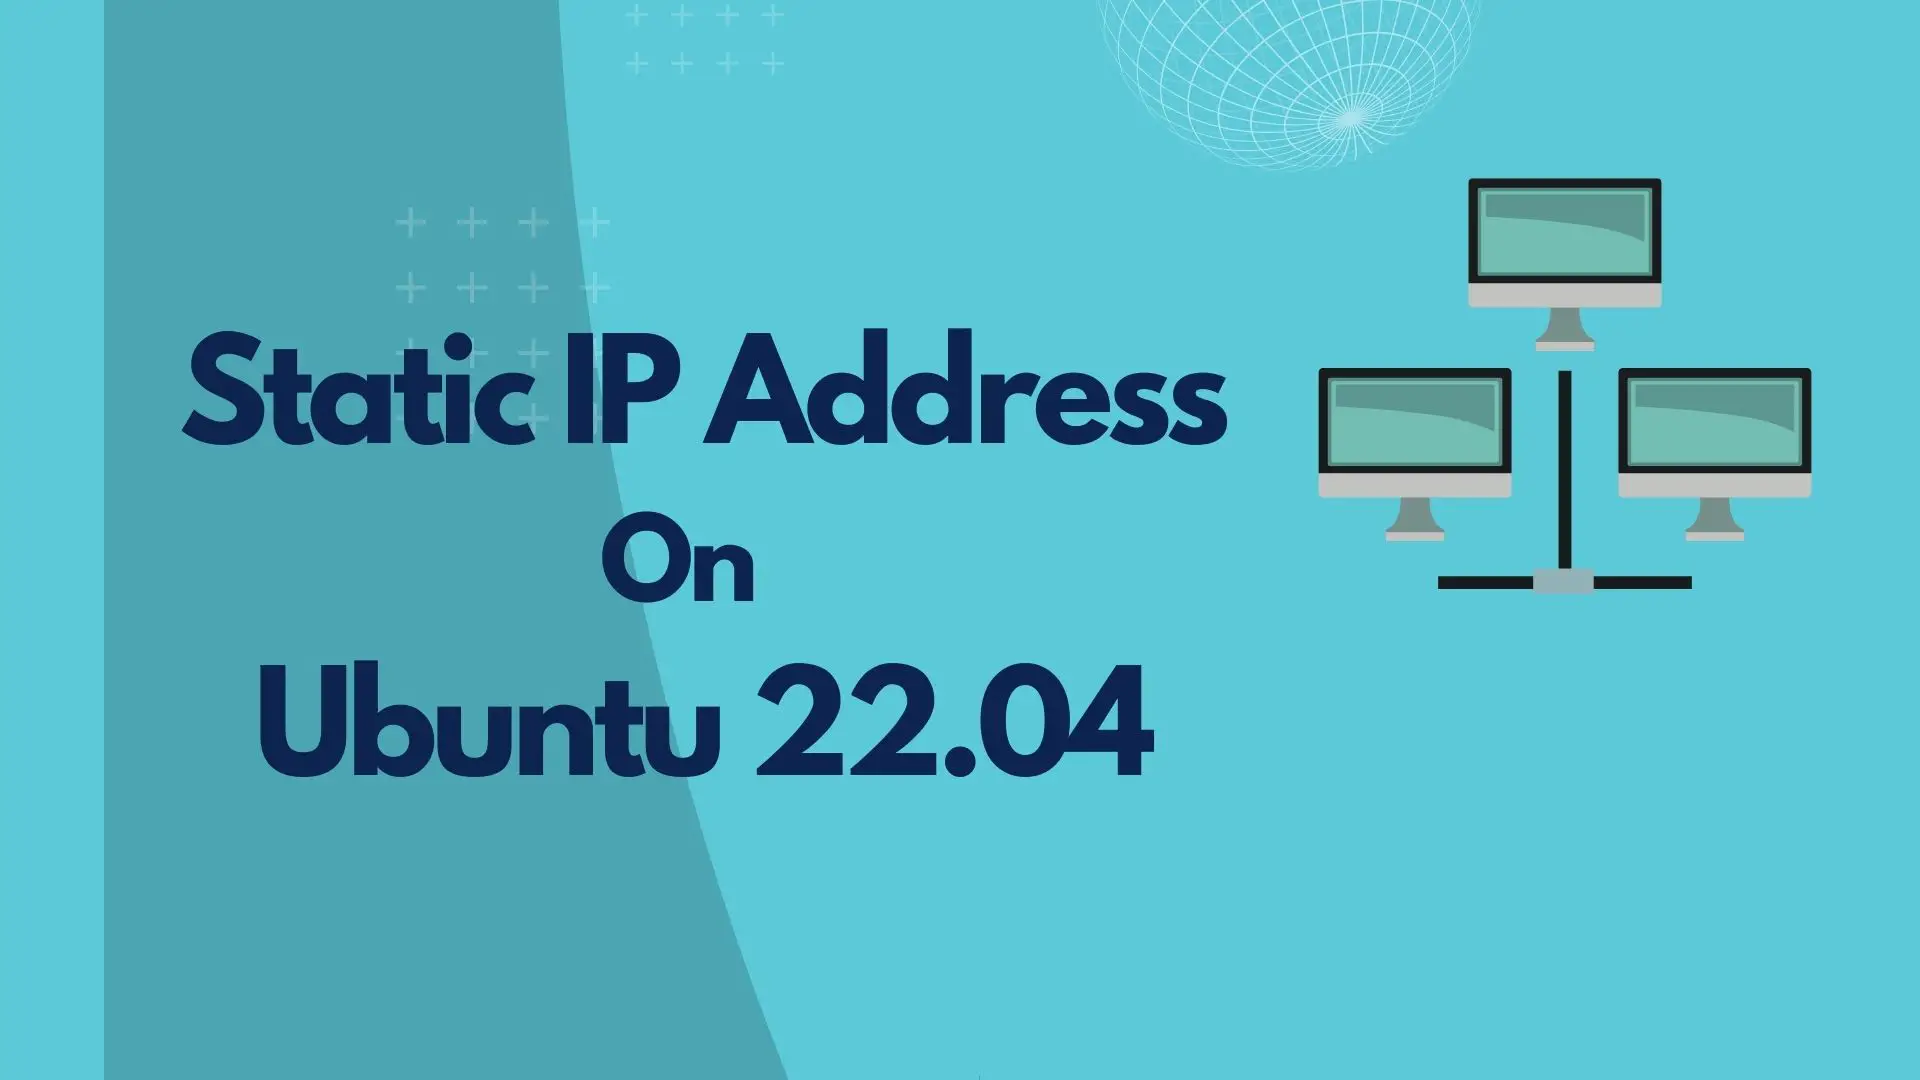 Static IP Address On Ubuntu 22.04